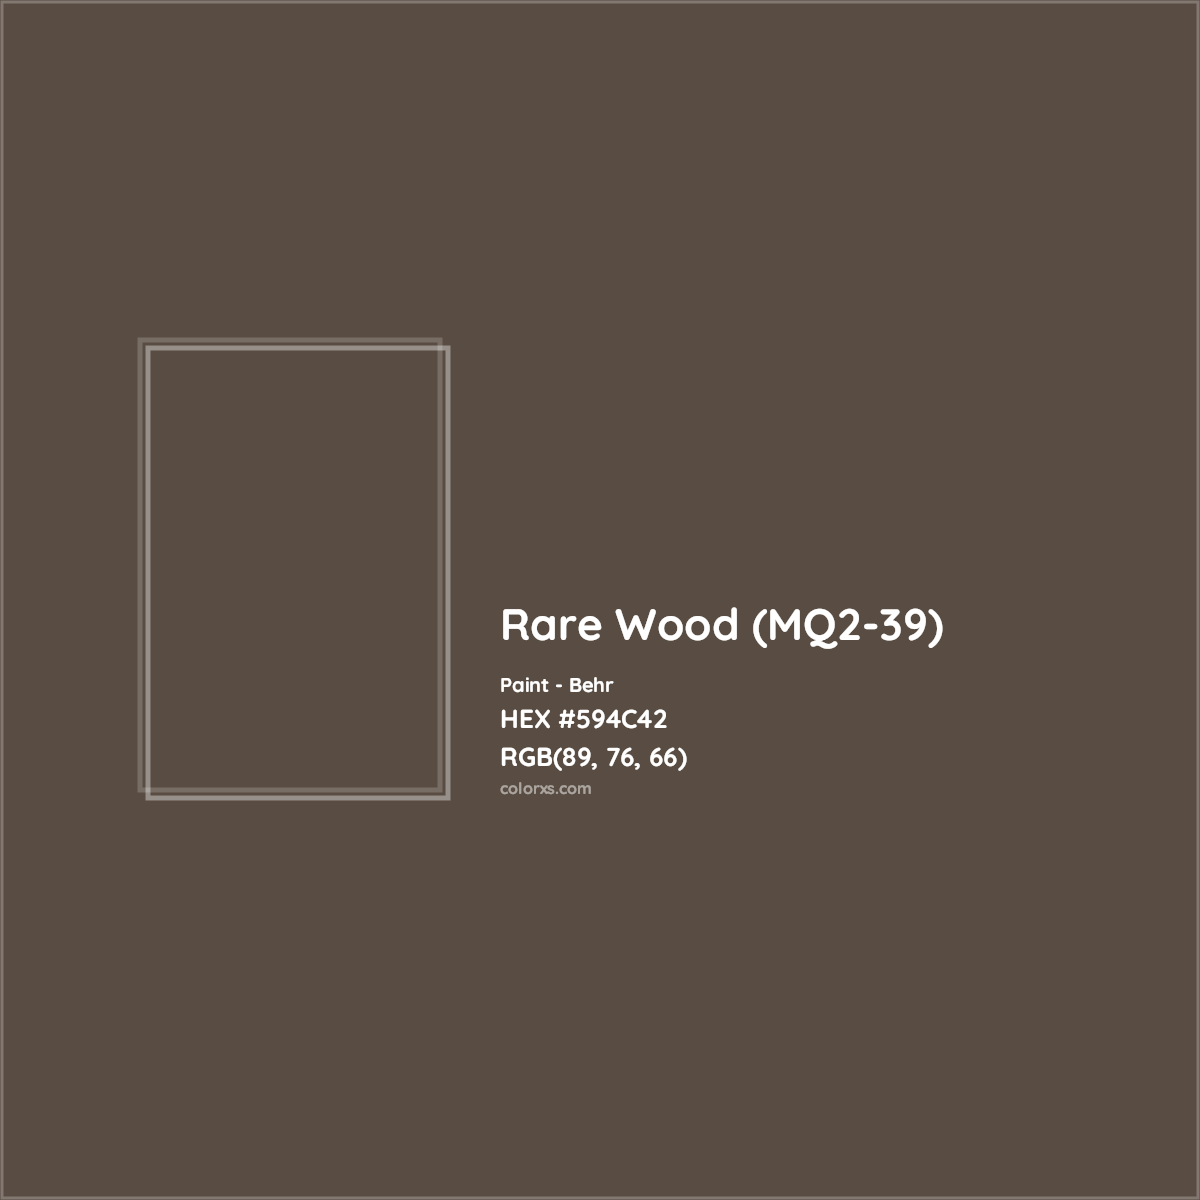 HEX #594C42 Rare Wood (MQ2-39) Paint Behr - Color Code